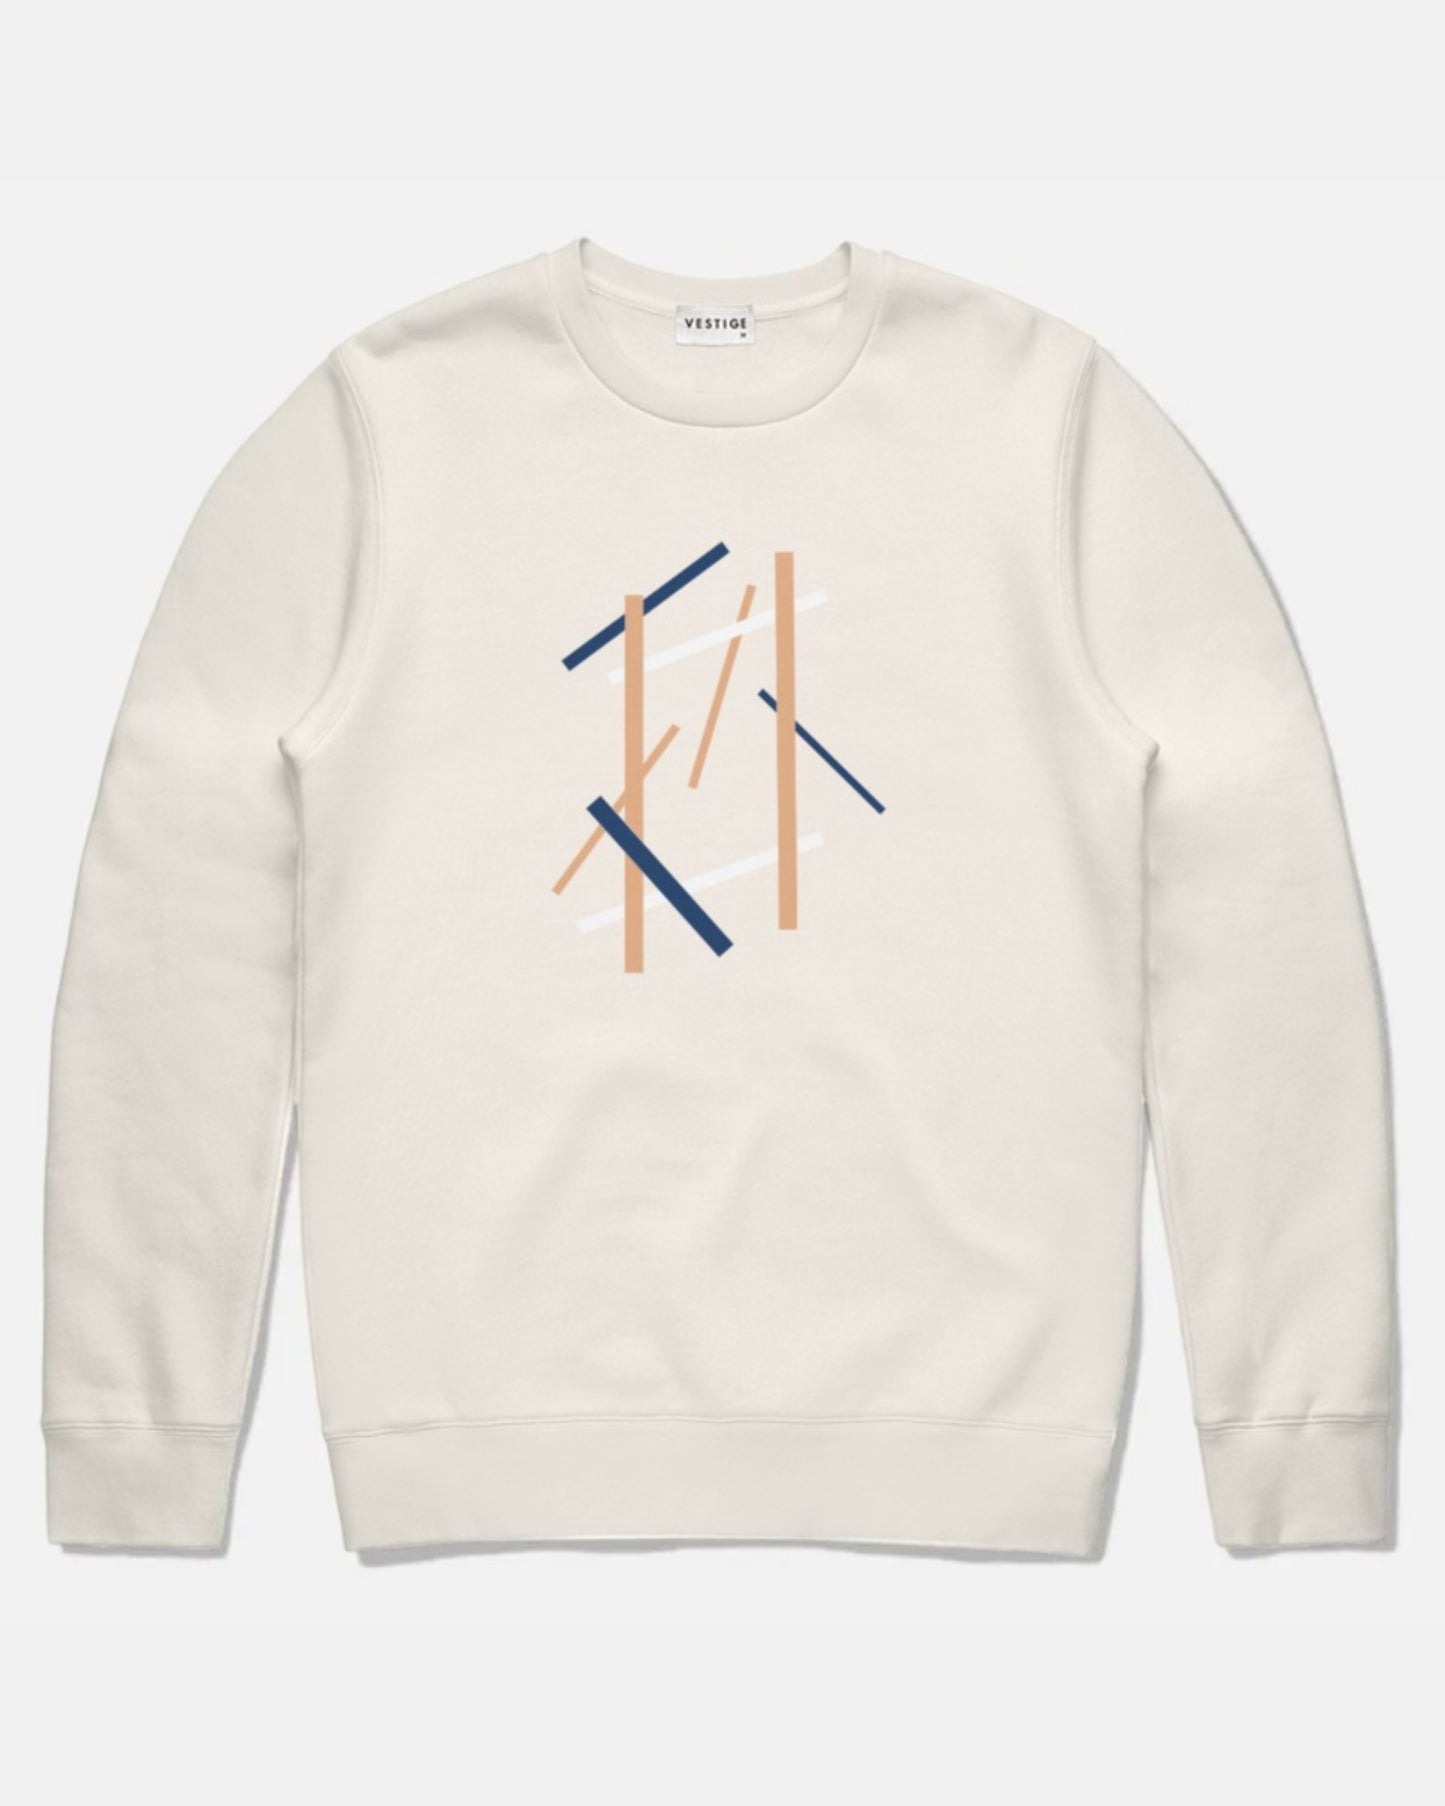 Line Collage Sweatshirt, Custom